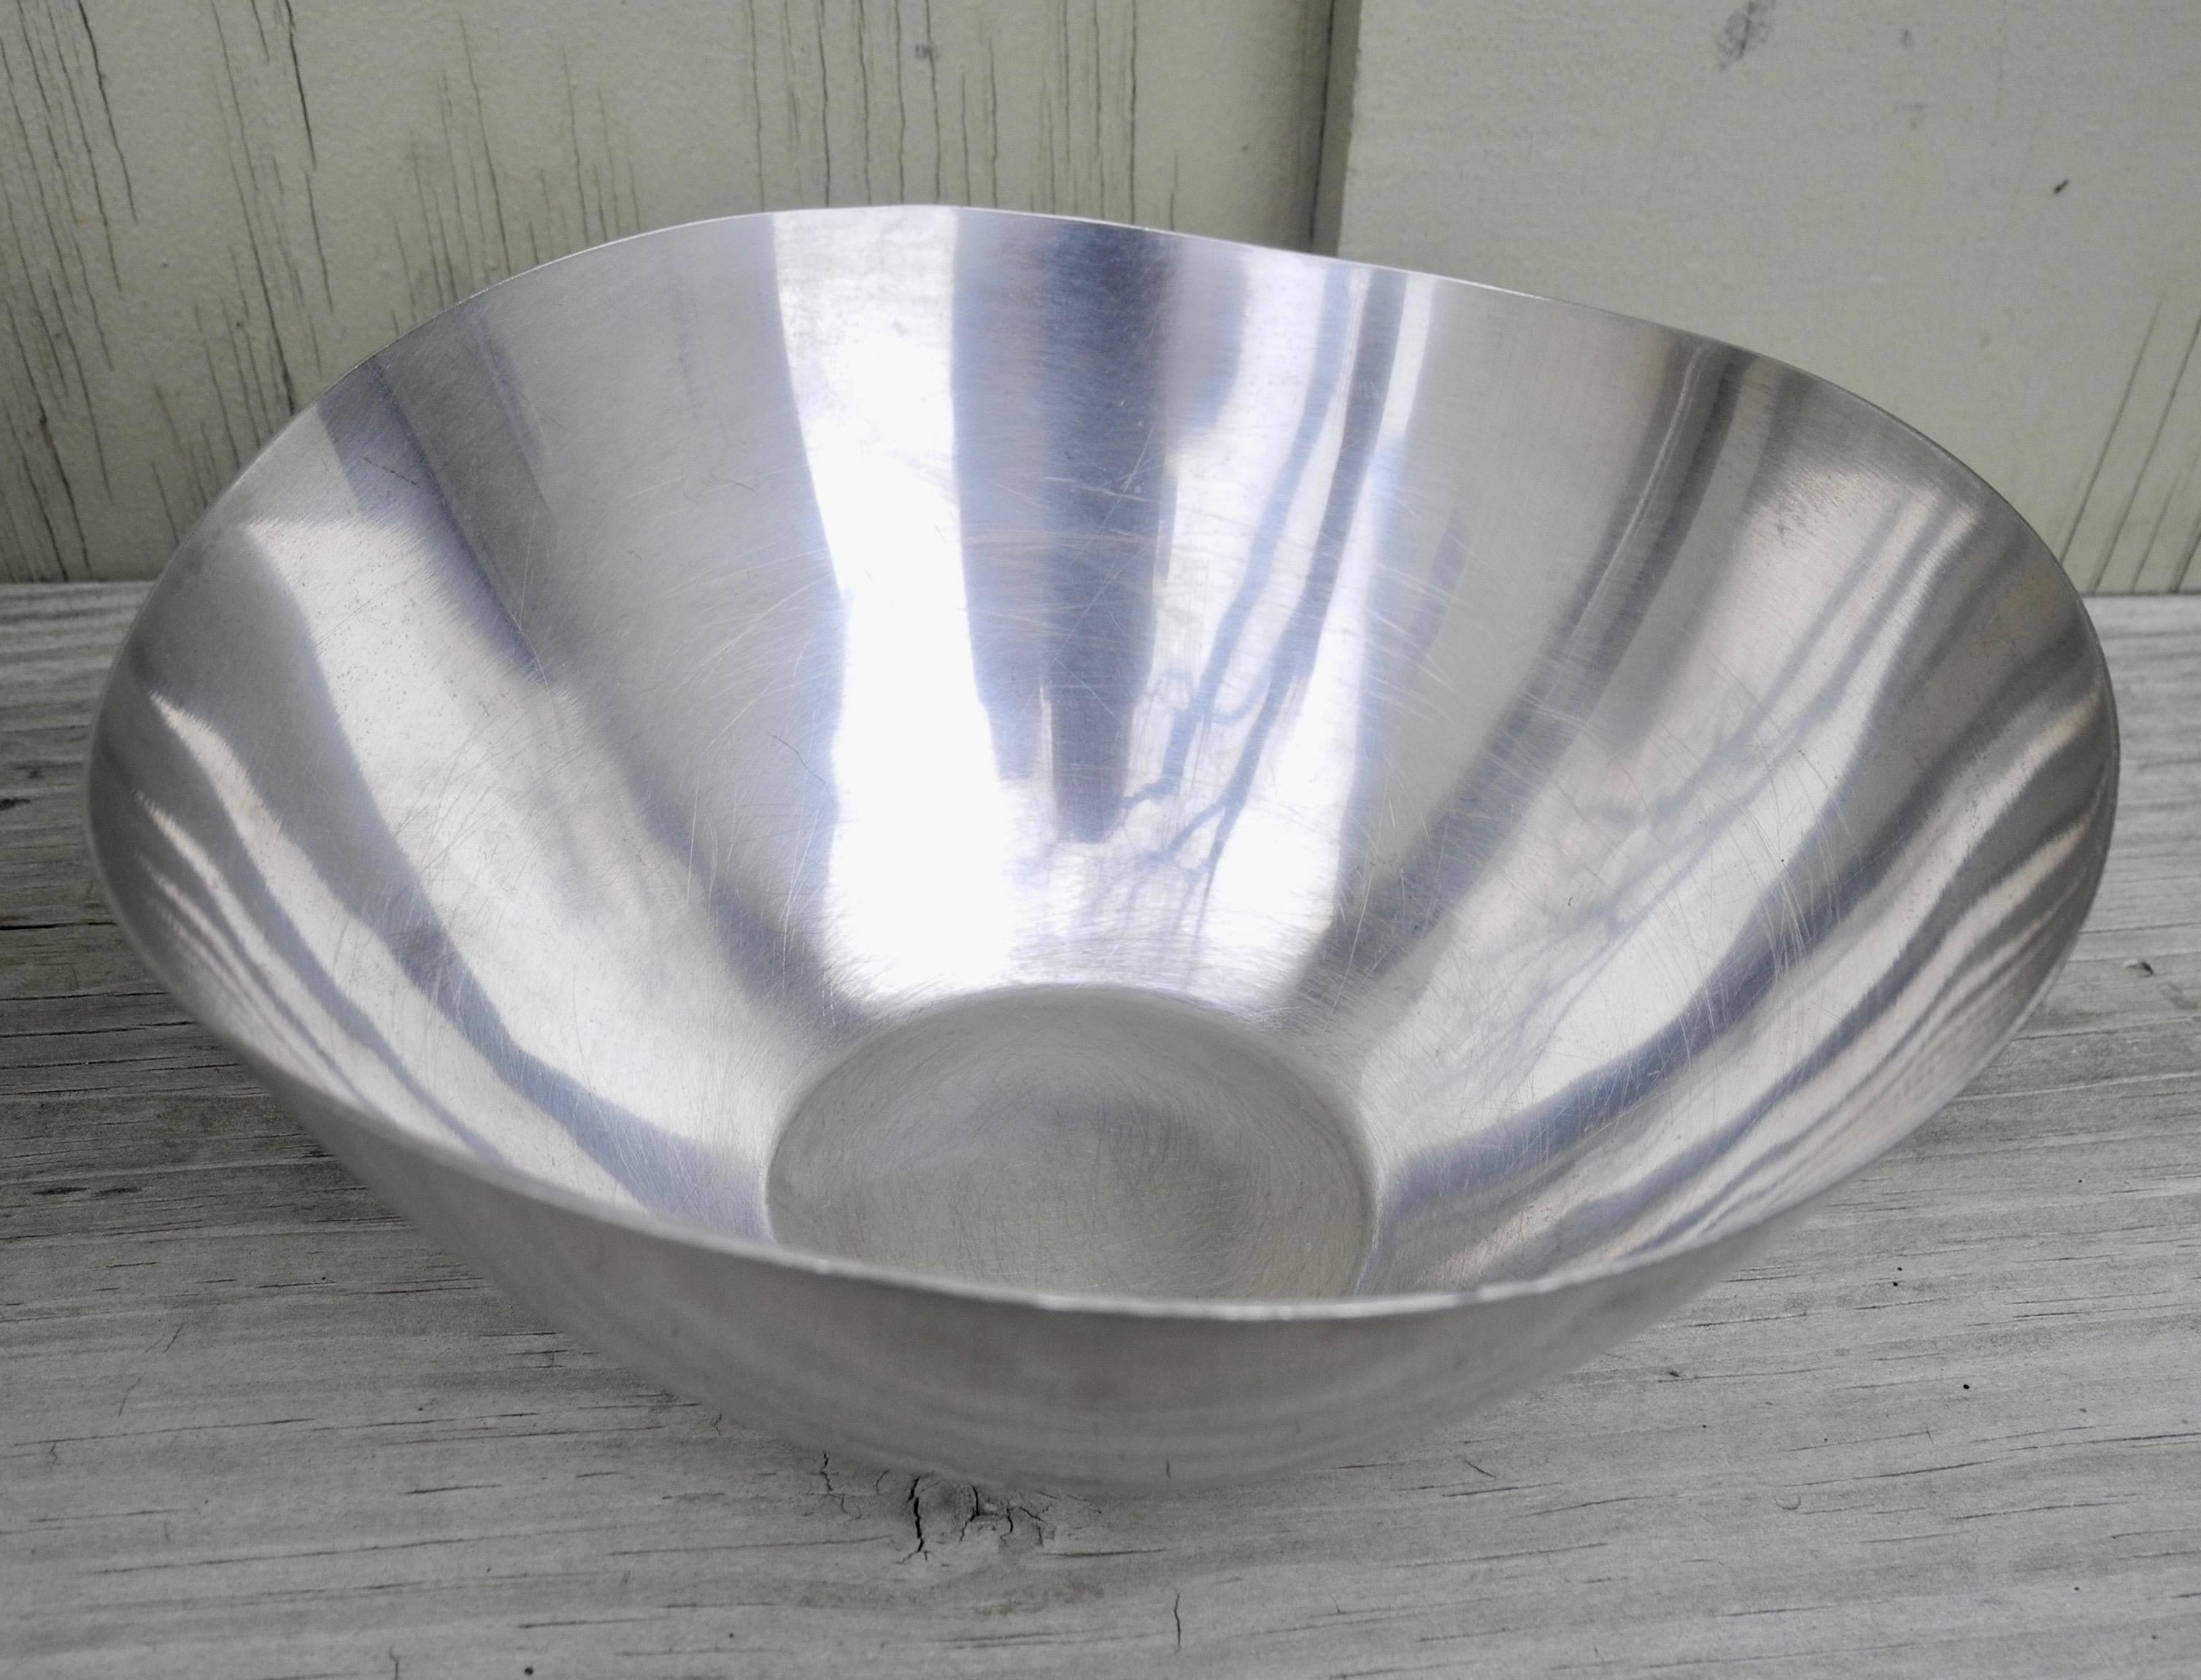 Pair of Vintage Stelton Stainless Steel Modern Design Sculptural Bowls, Denmark For Sale 2